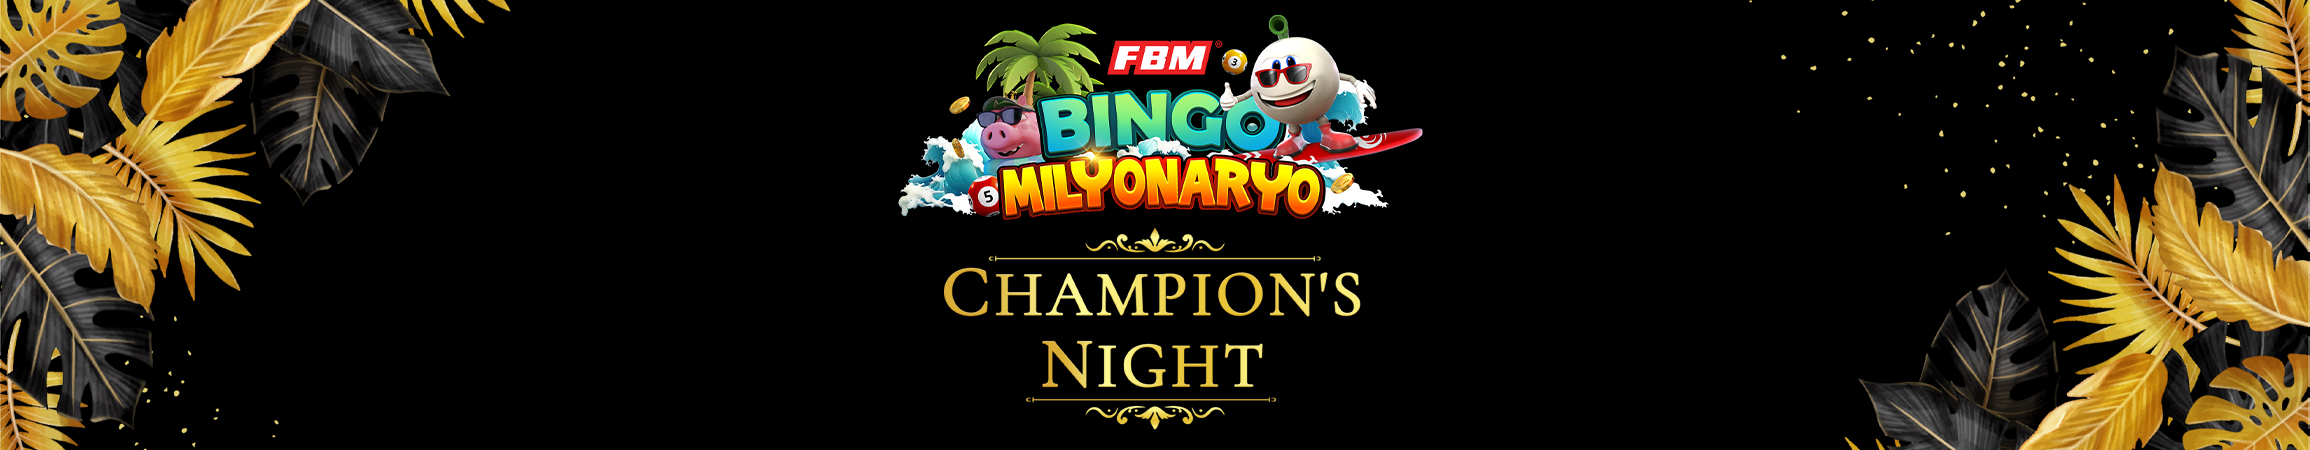 Champion’s Night: celebrating Bingo Milyonaryo's success with a big announcement